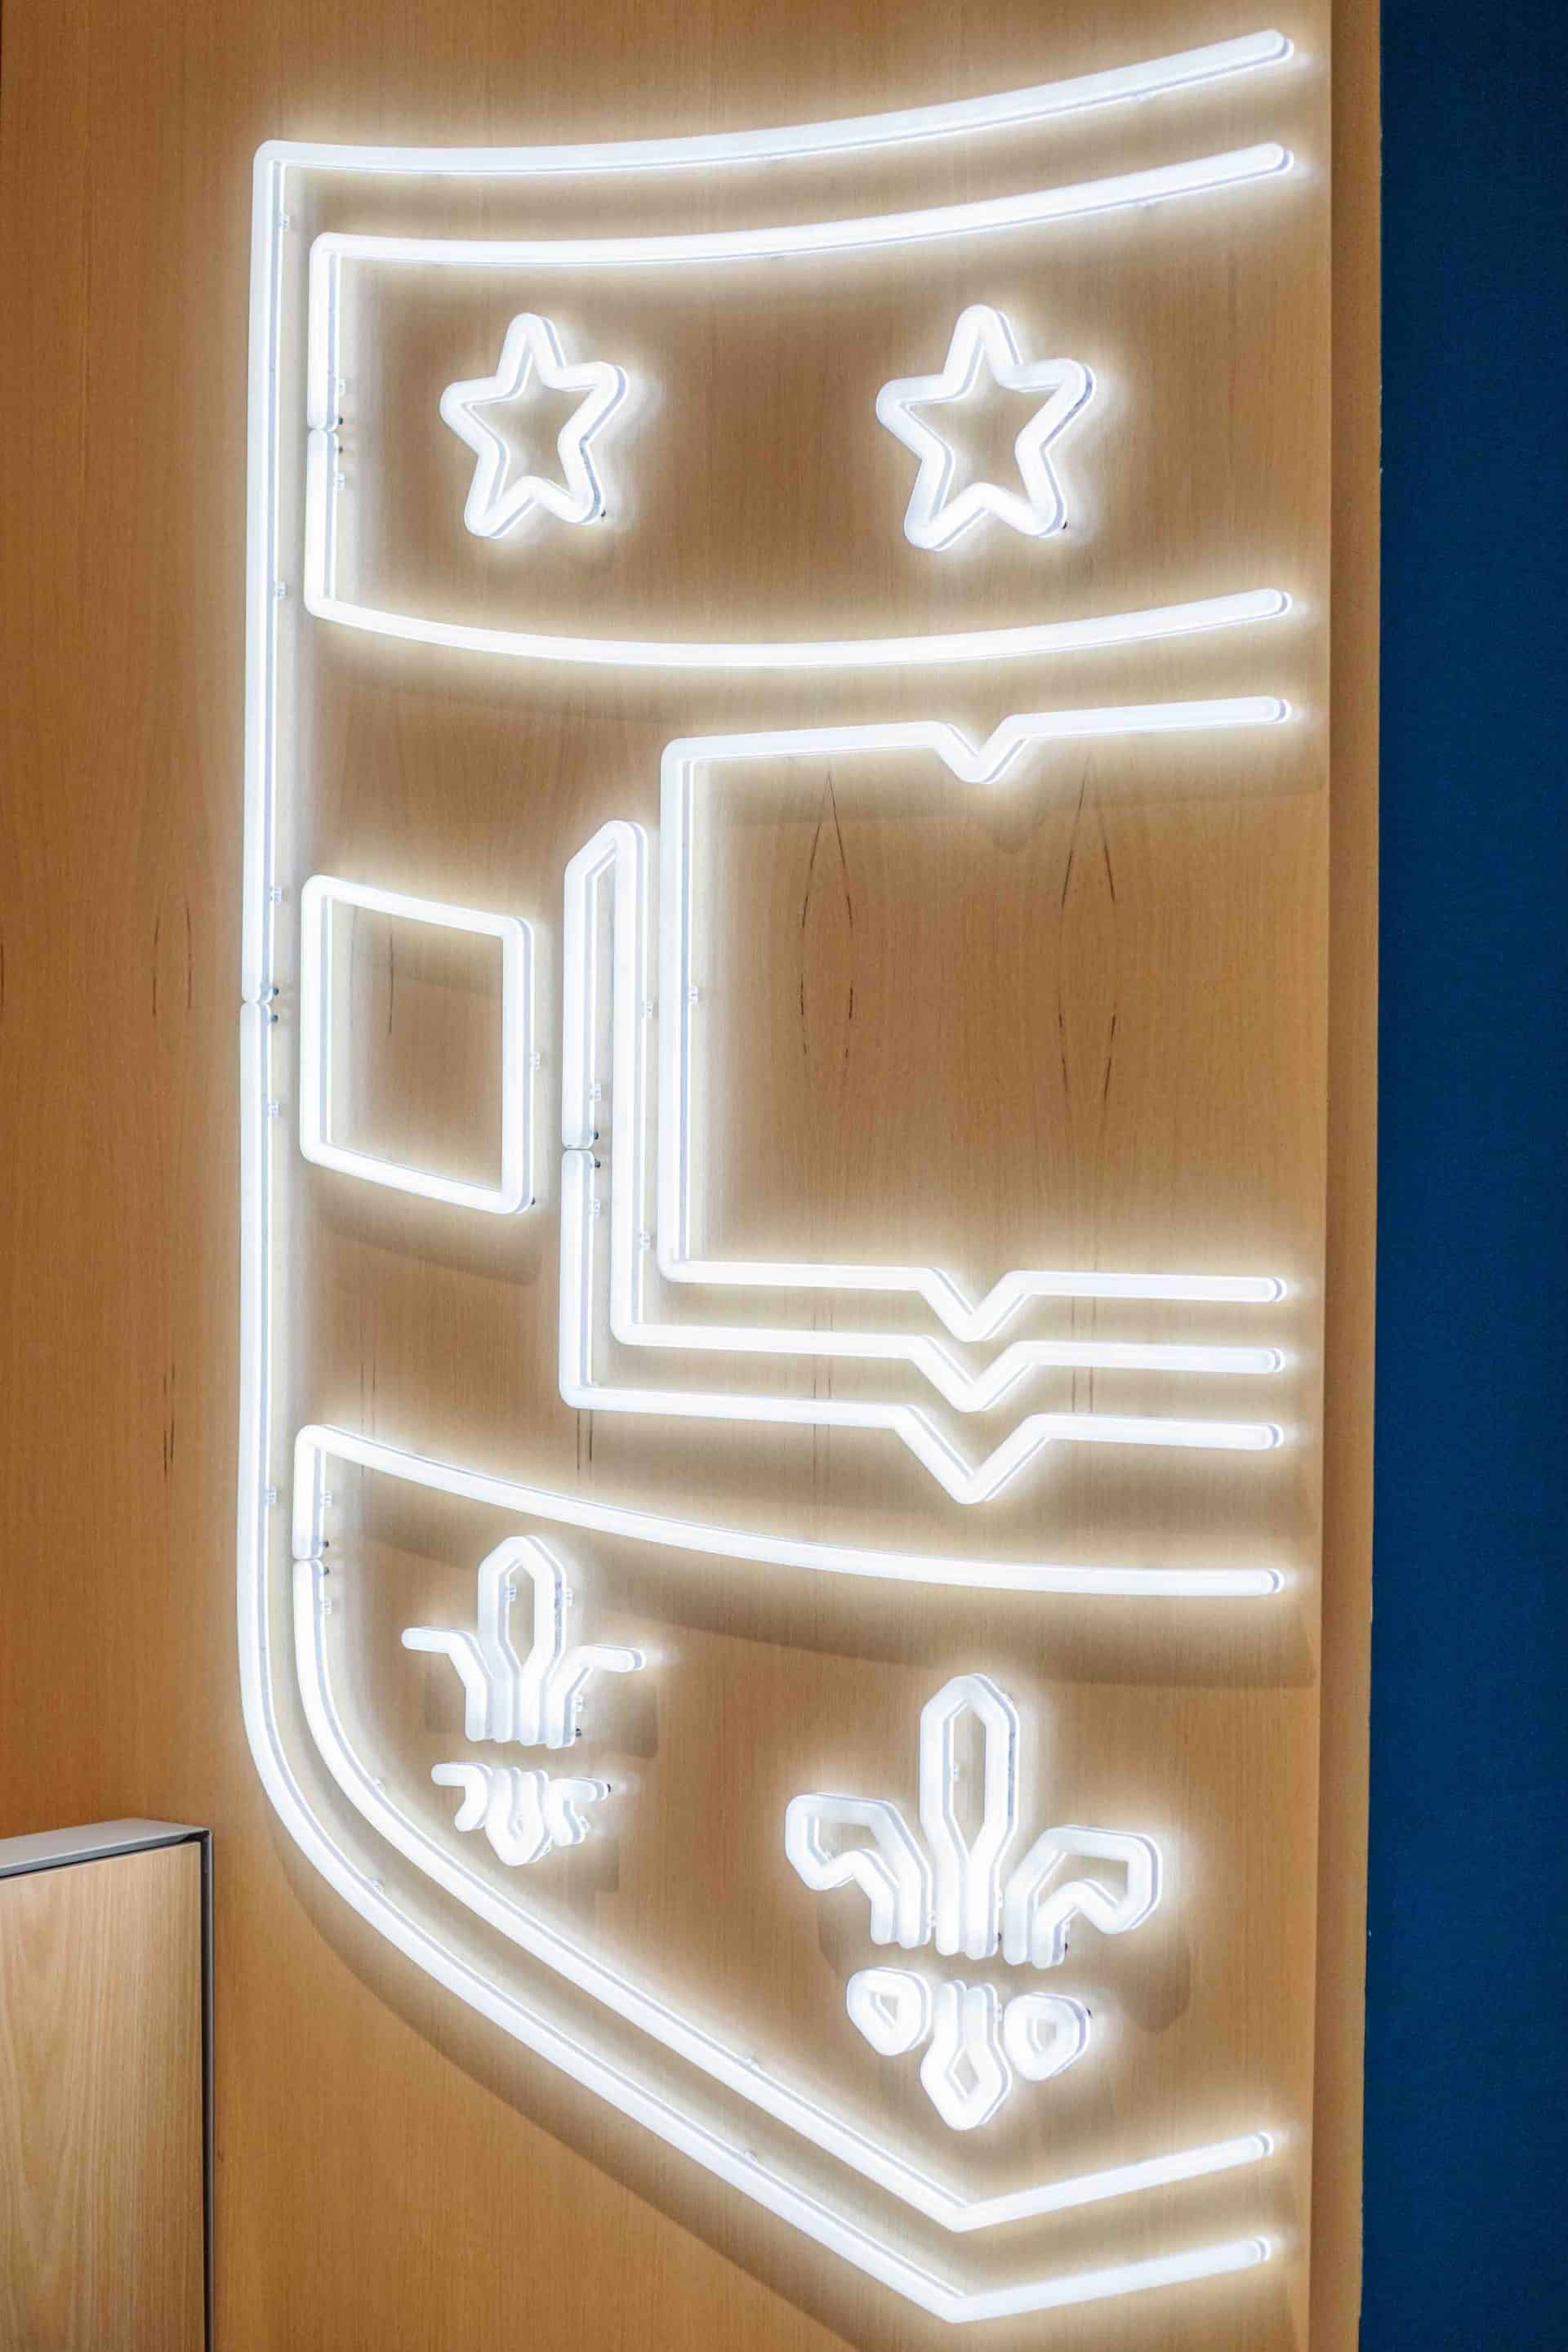 neon logo sign custom made for washington university HR office